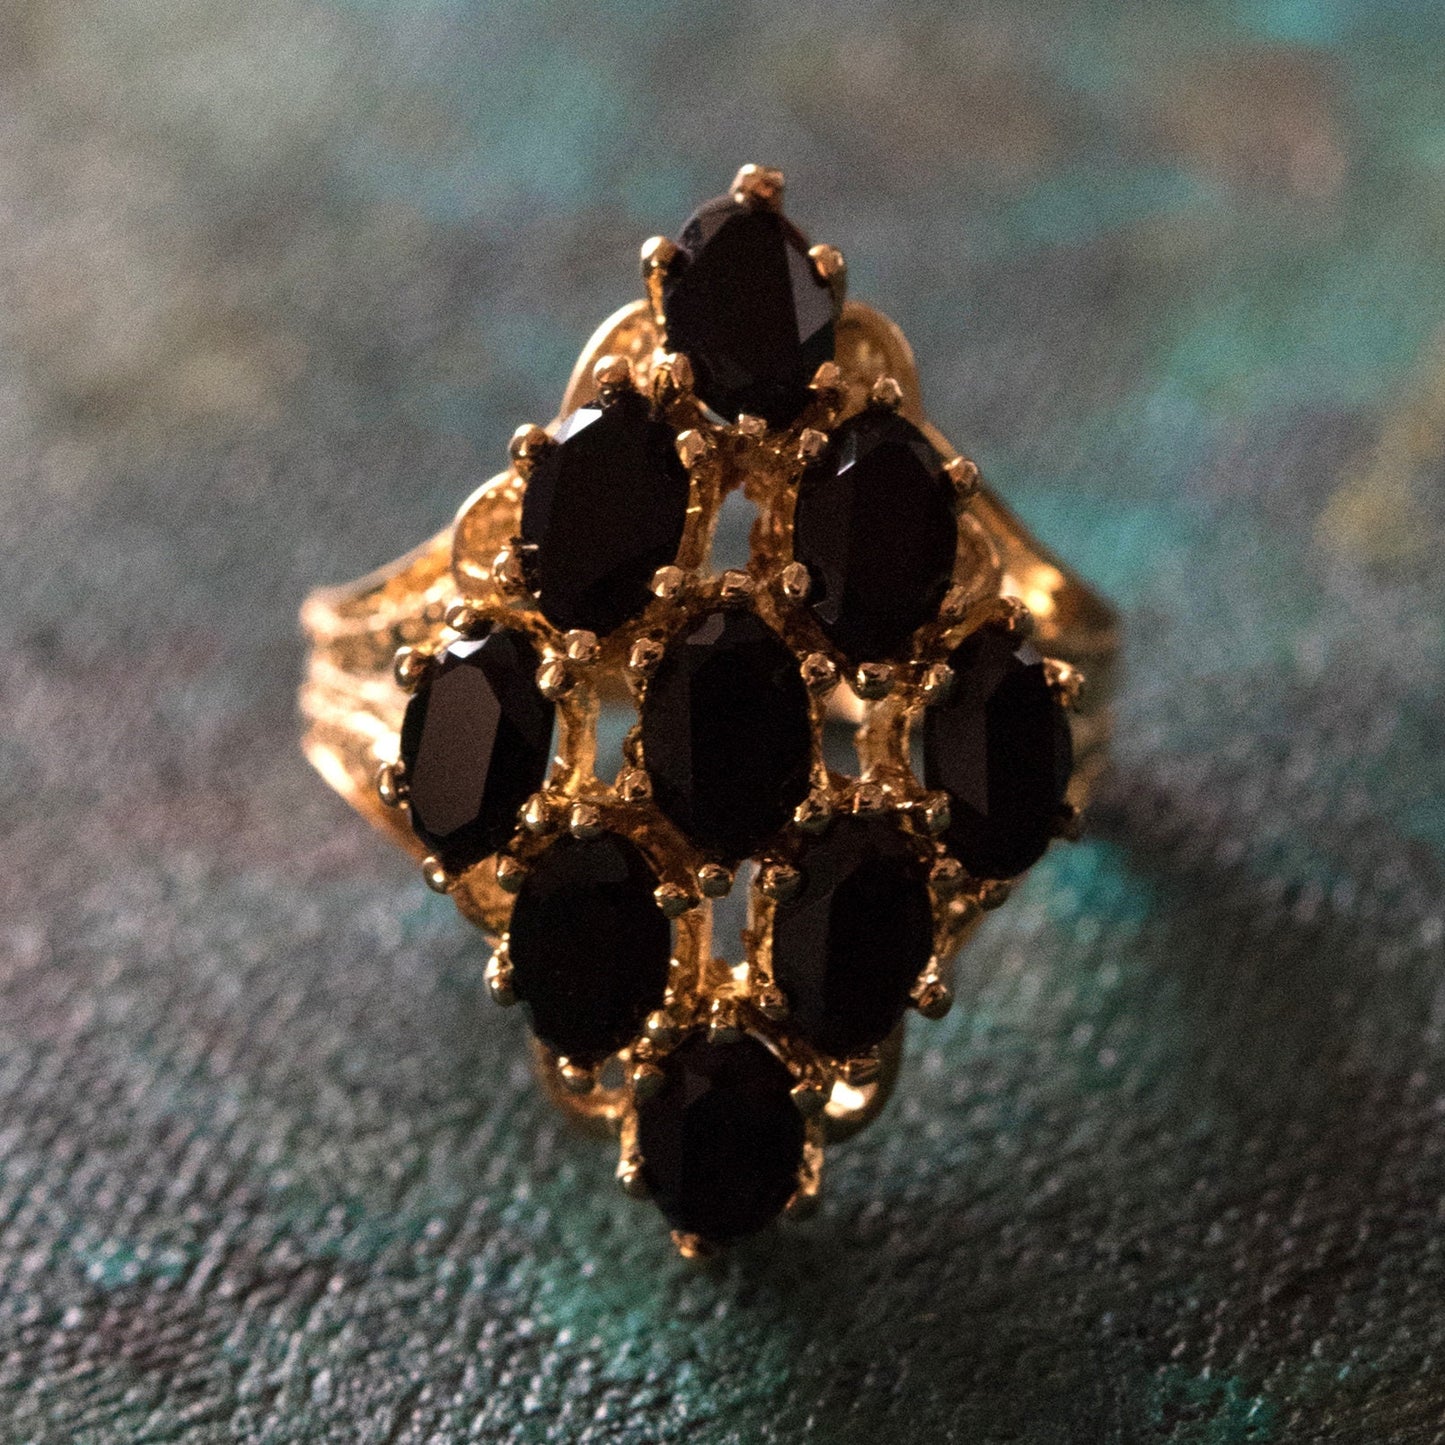 Vintage Ring Garnet Swarovski Crystal Cocktail Ring 18k Gold Antique Womans Handmade Garnets Rings R284 - Limited Stock - Never Worn